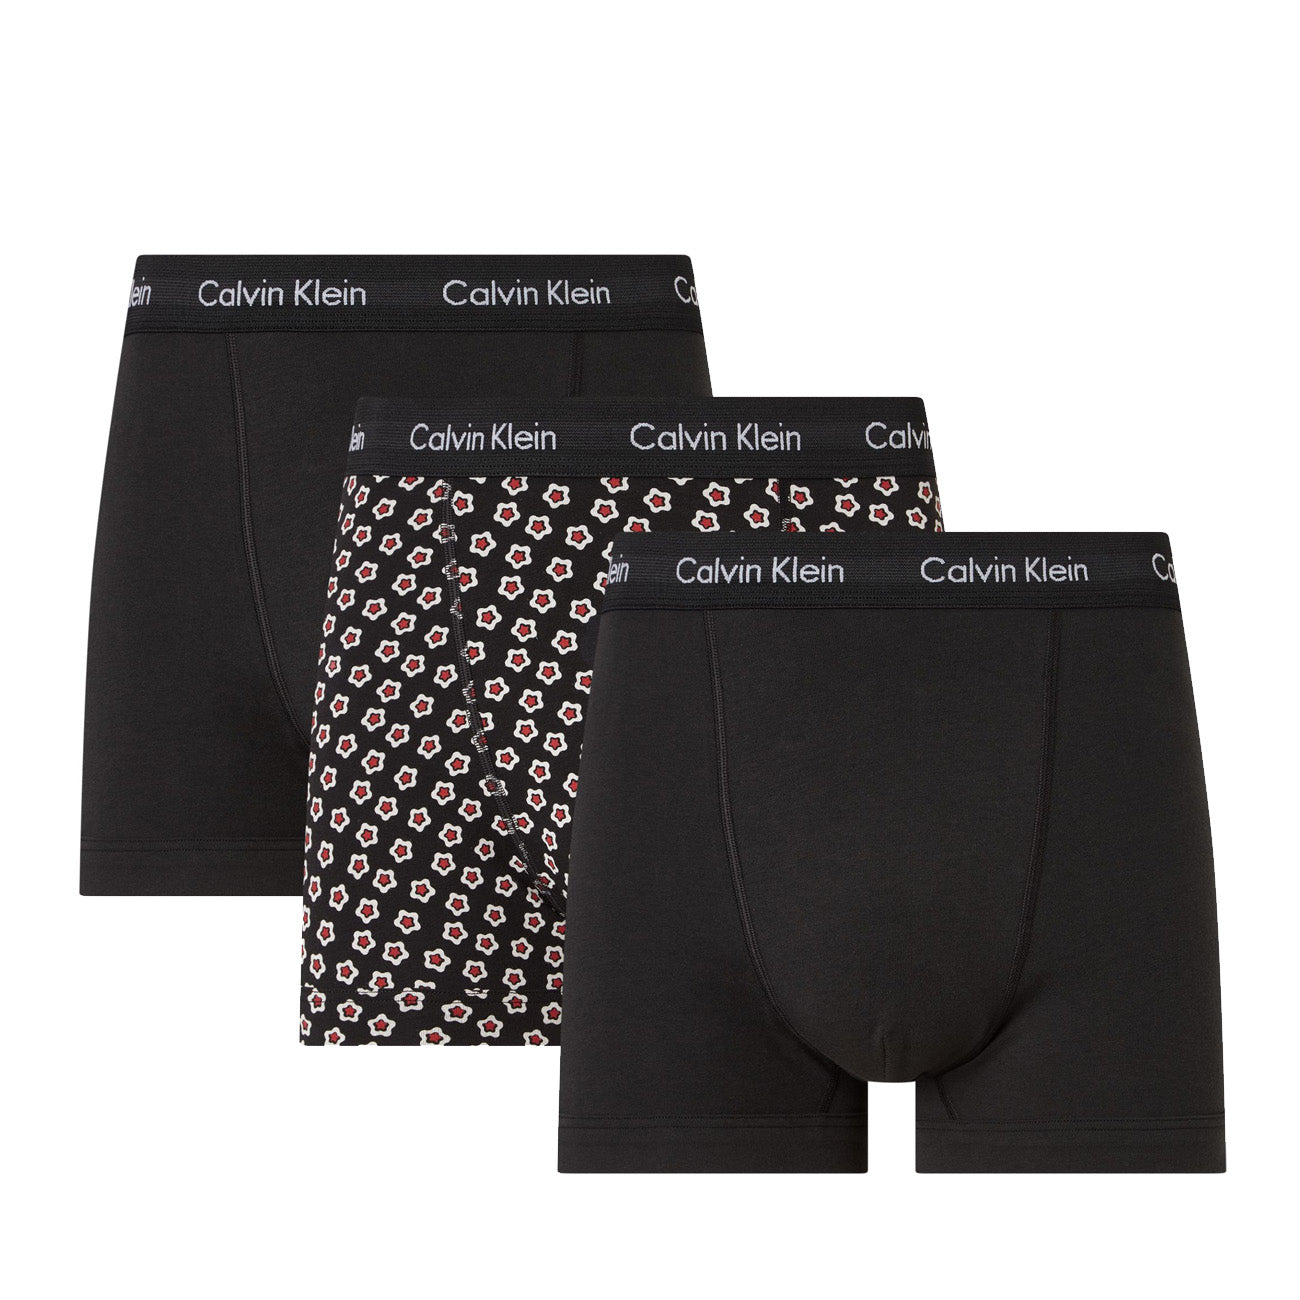 Calvin Klein 3er Pack Trunk Cotton Stretch Classic Fit Boxershorts Black Black Dreamy Star Print